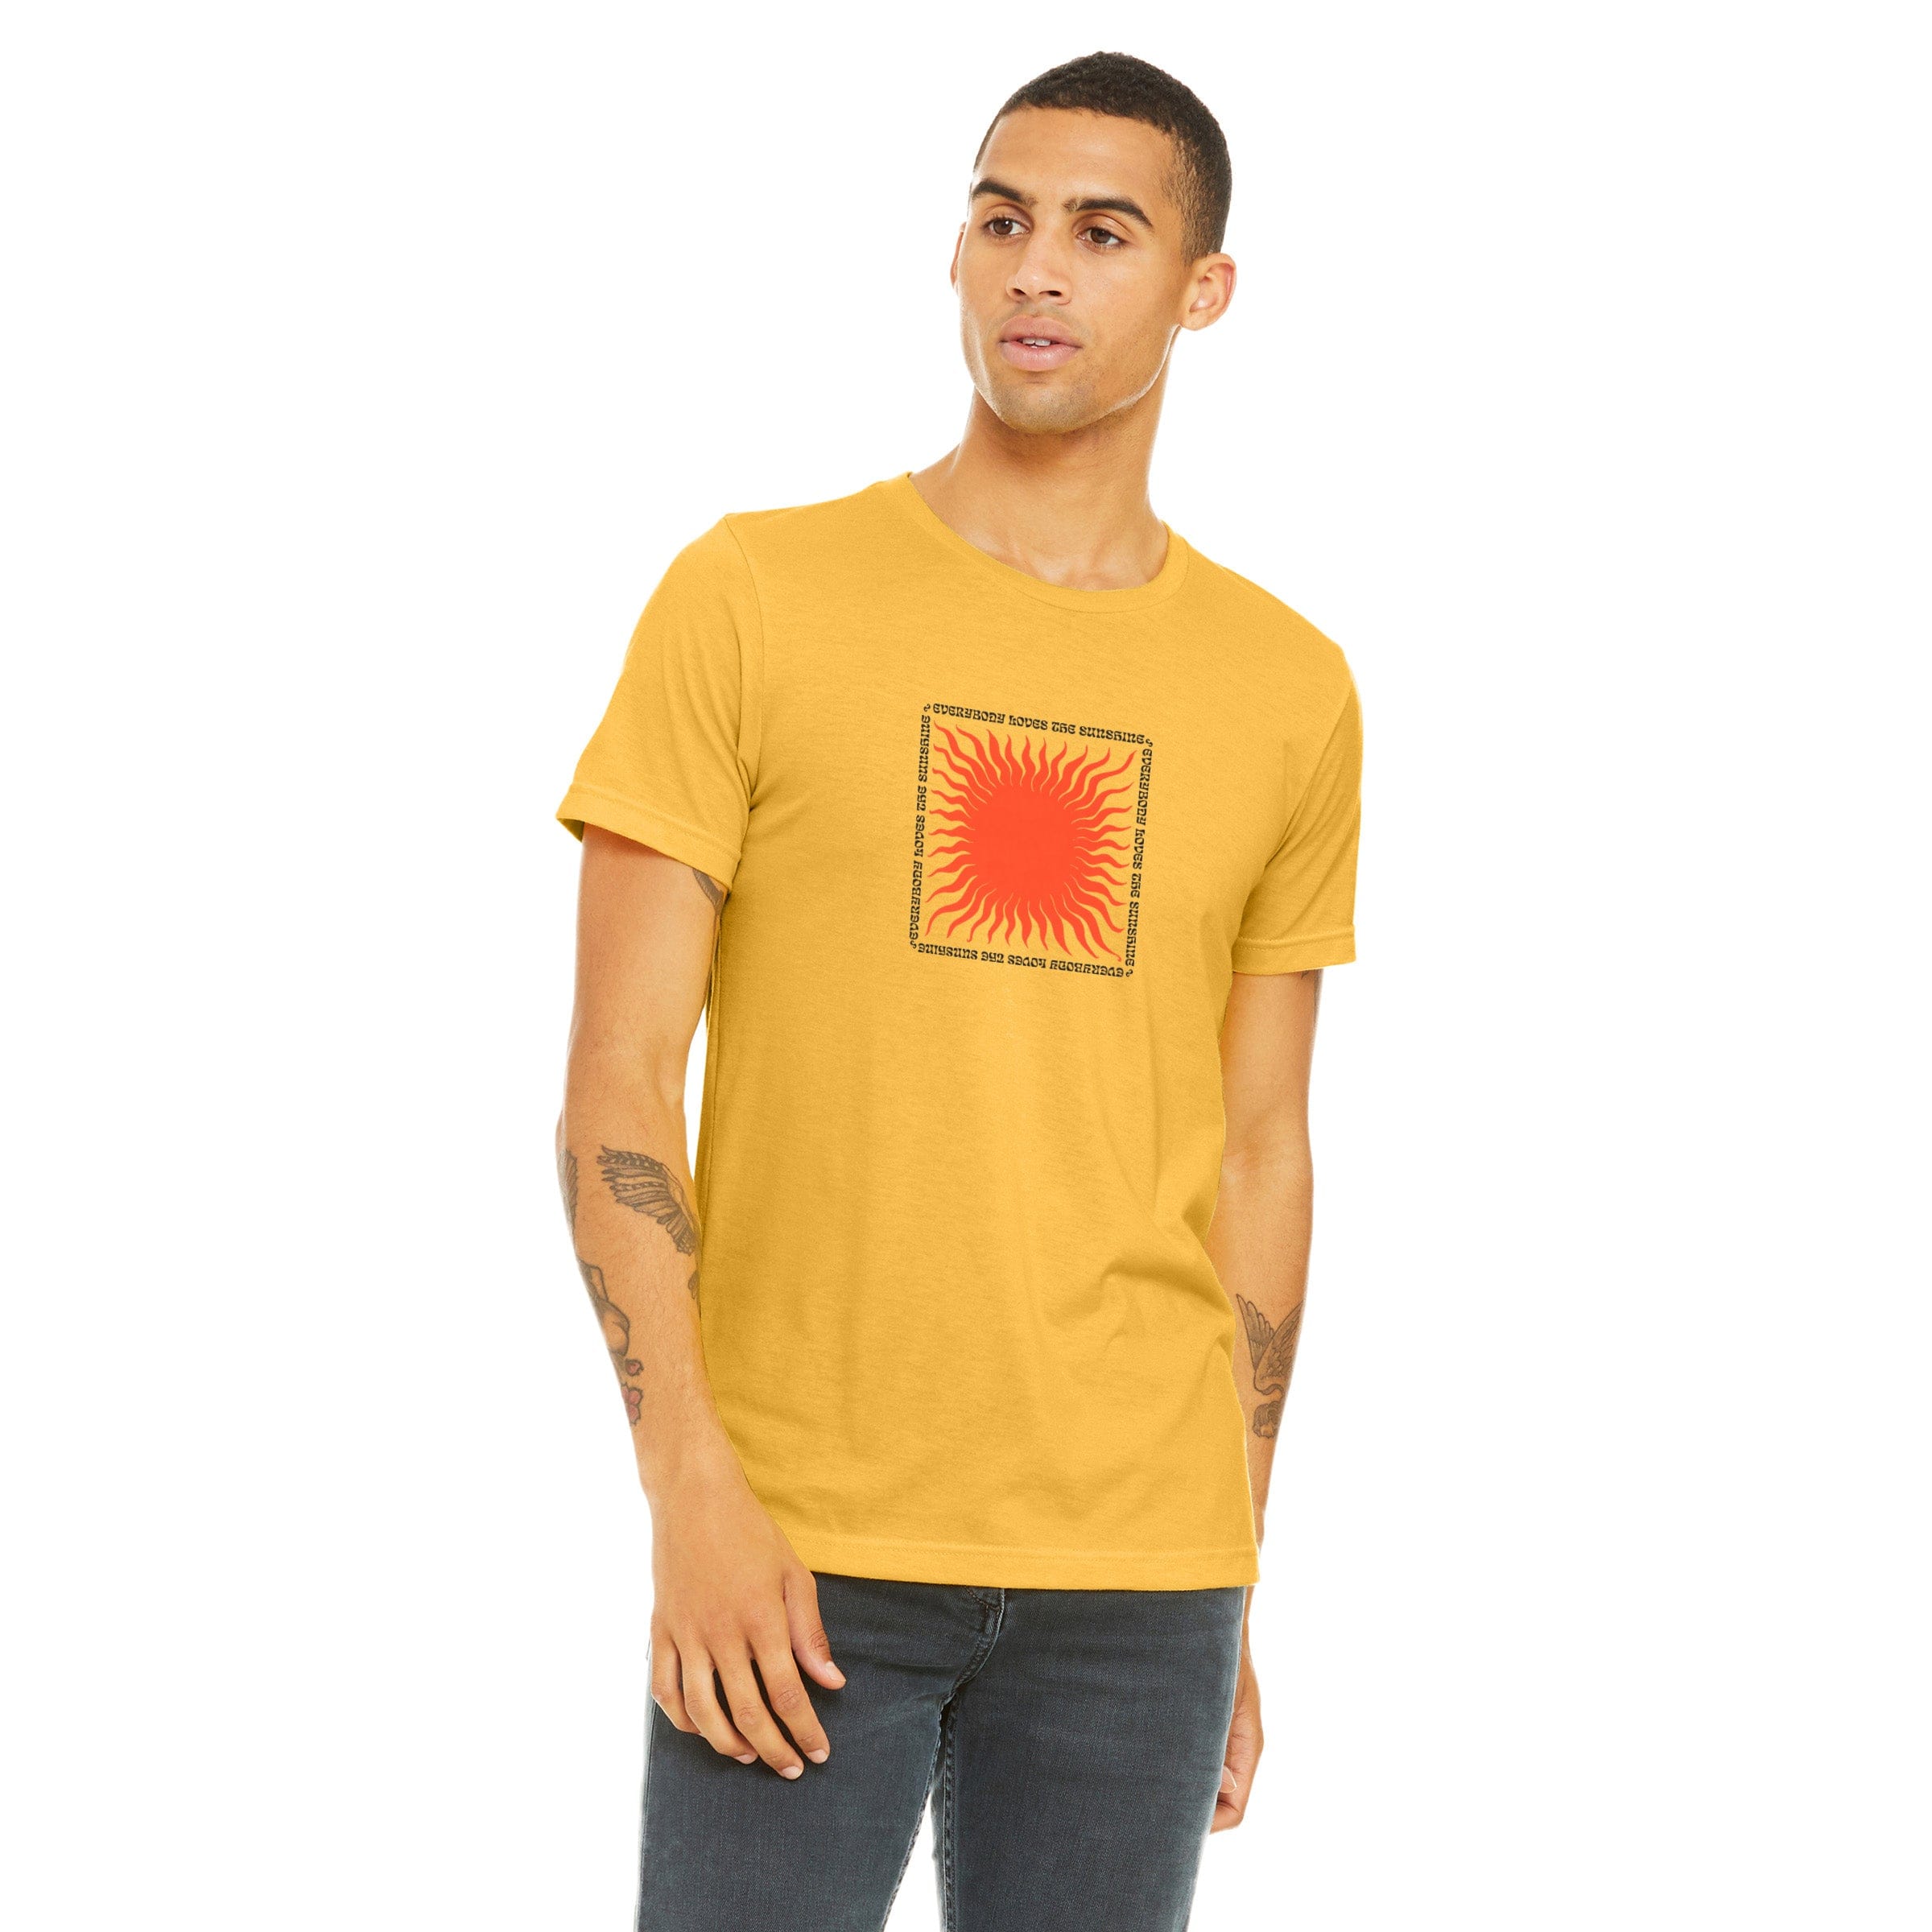 Everybody Loves the Sunshine T-Shirt